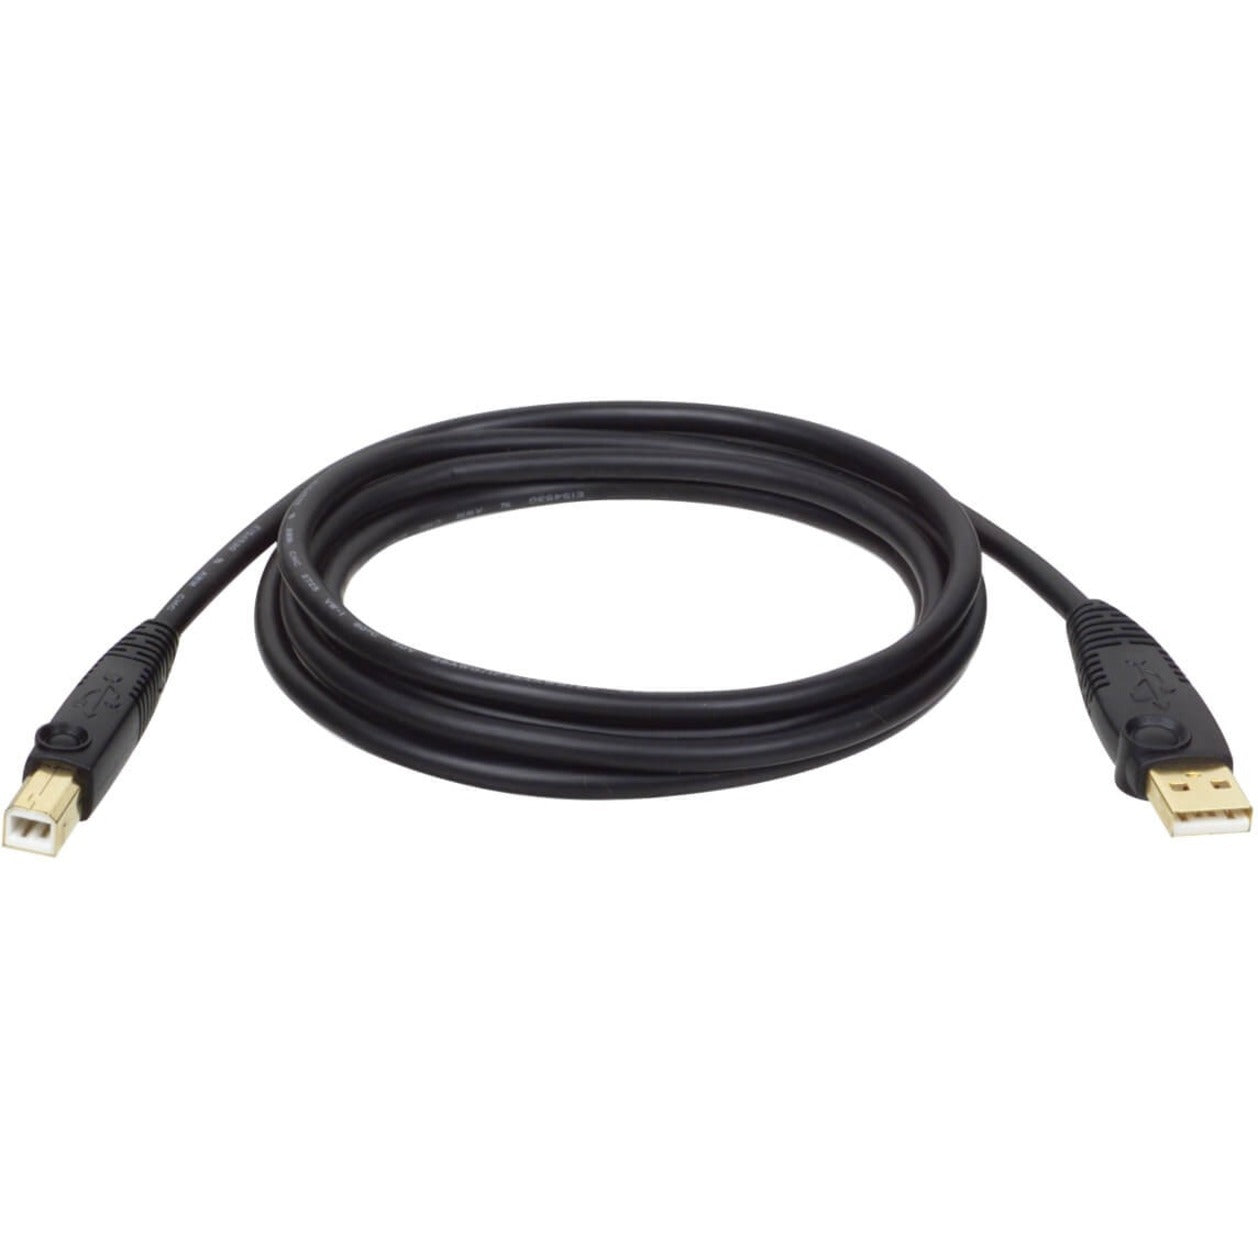 Tripp Lite U022-015 USB 2.0 A/B Cable 15Ft, Black - High-Speed Data Transfer